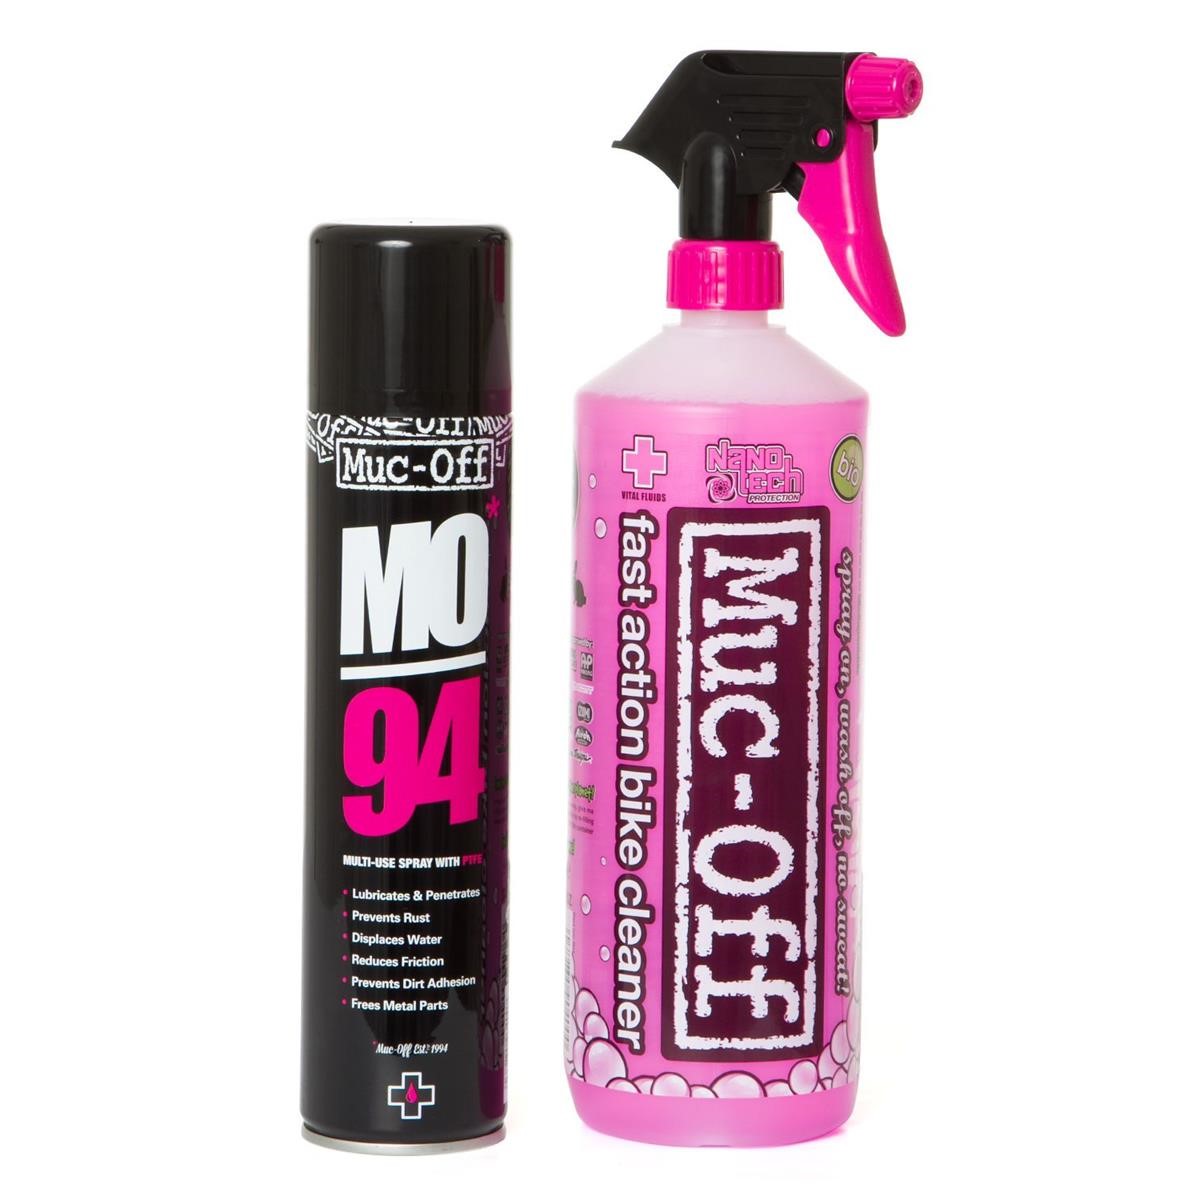 Muc-Off Nettoyant Velo Nano Tech Cleaner/MO94 Spray Set 2 in 1